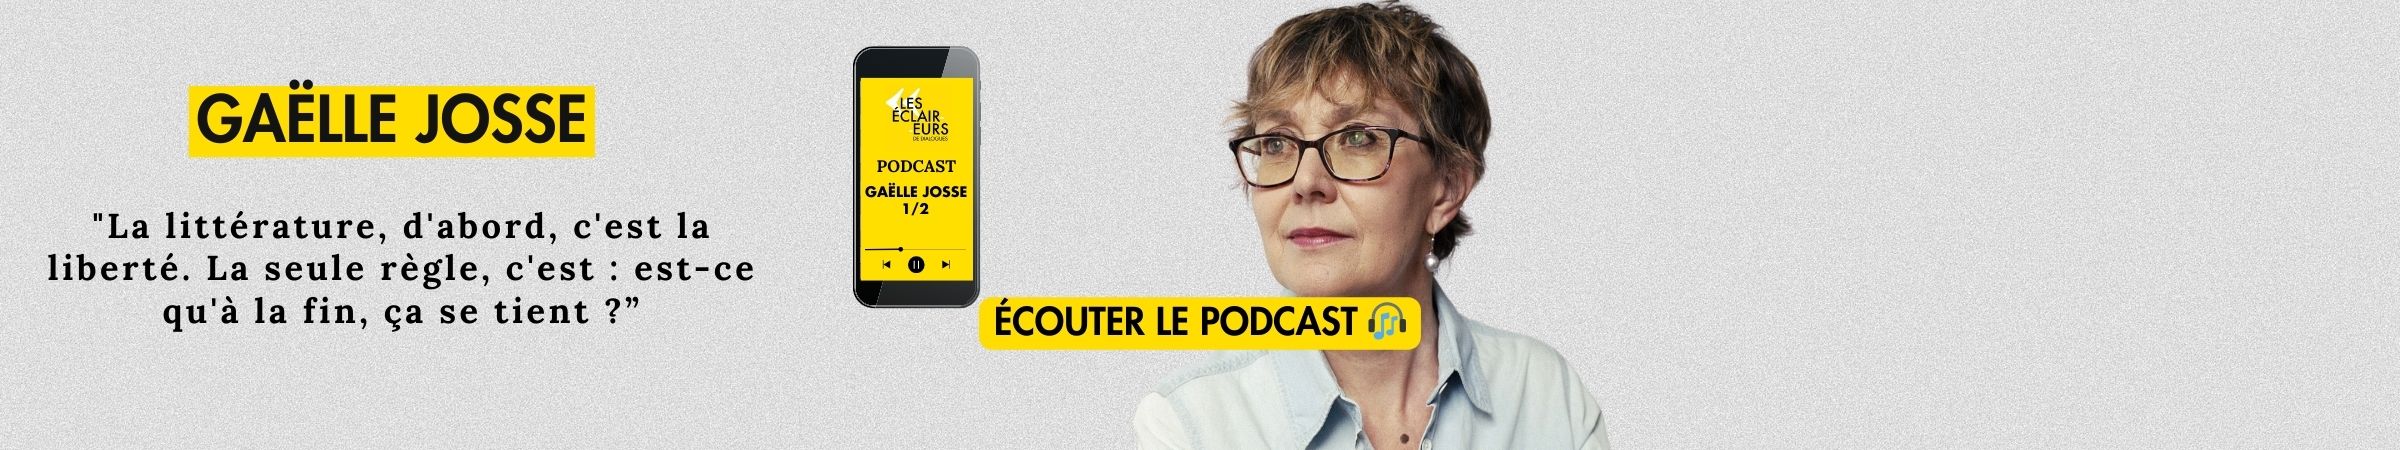 Gaëlle Josse en podcast